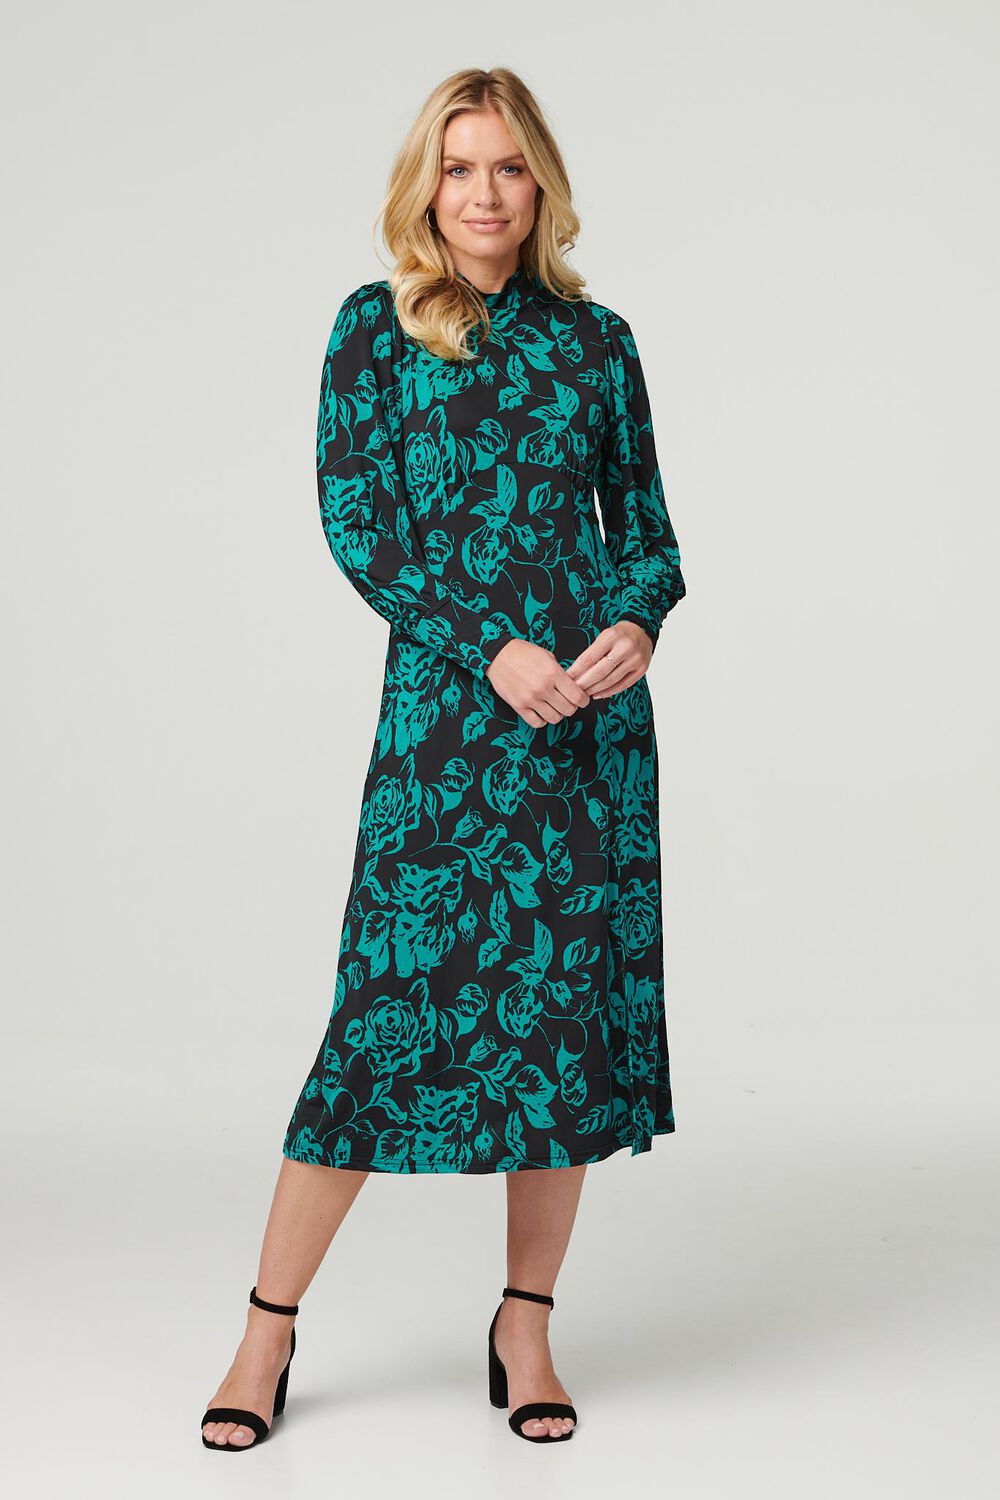 Izabel London Women’s Green and Black Floral Print Long Sleeve High Neck Split Midi Dress, Size: 8